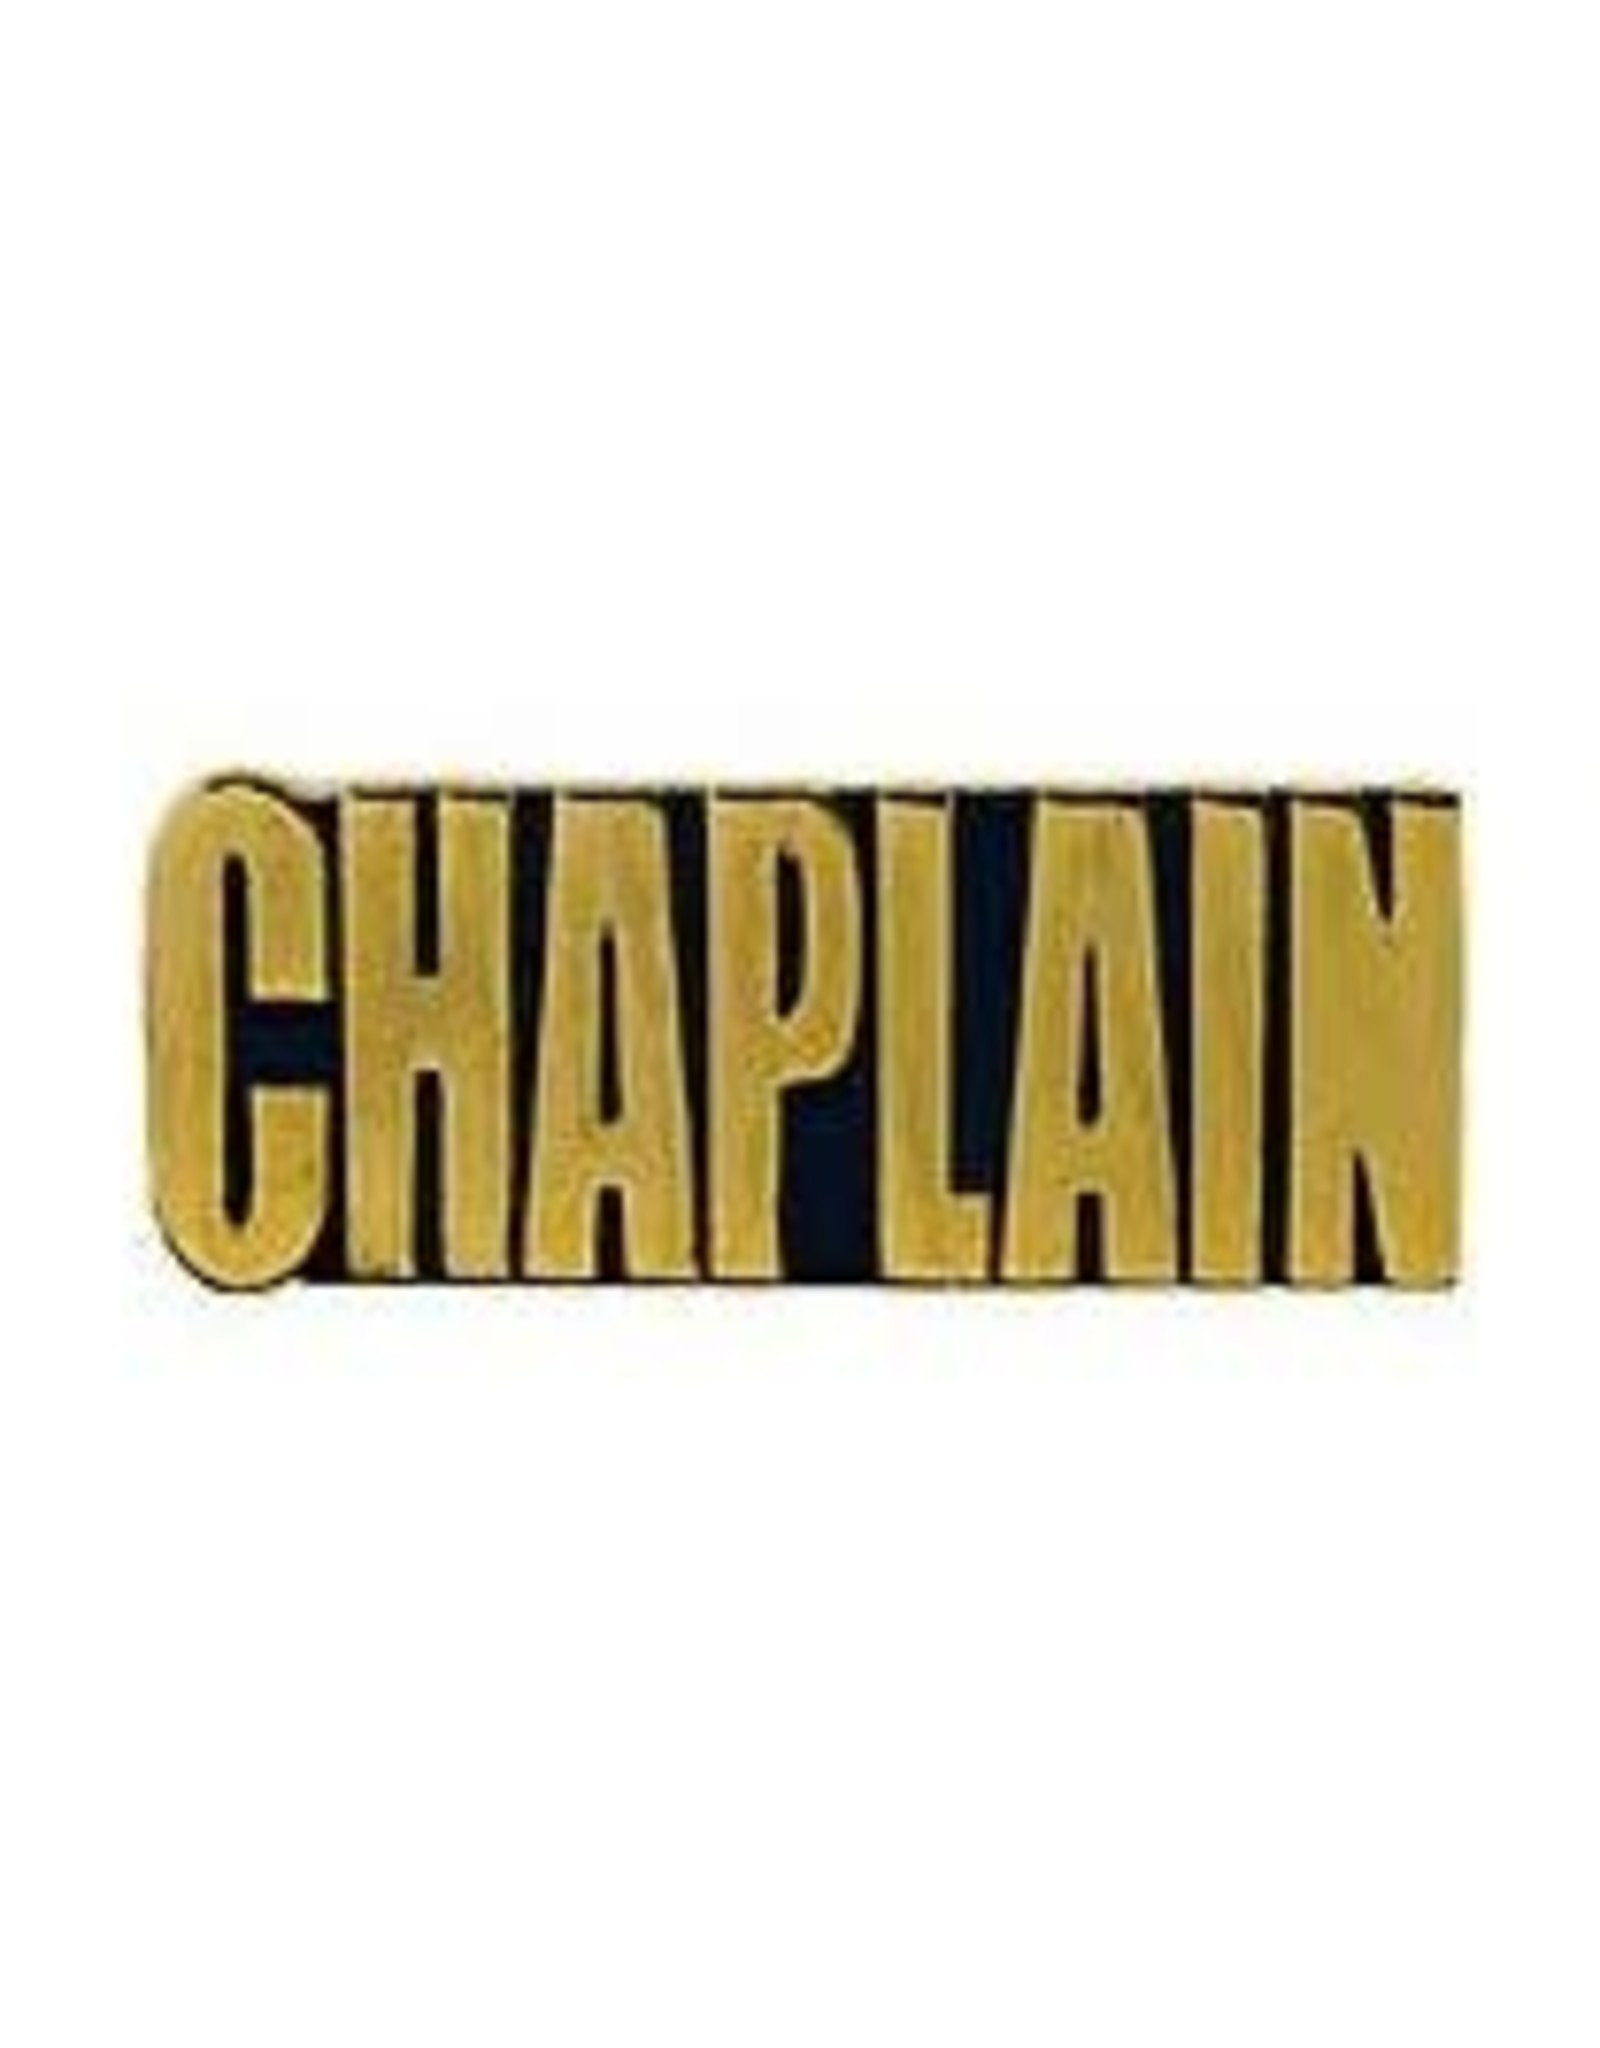 Pin - Script Chaplain